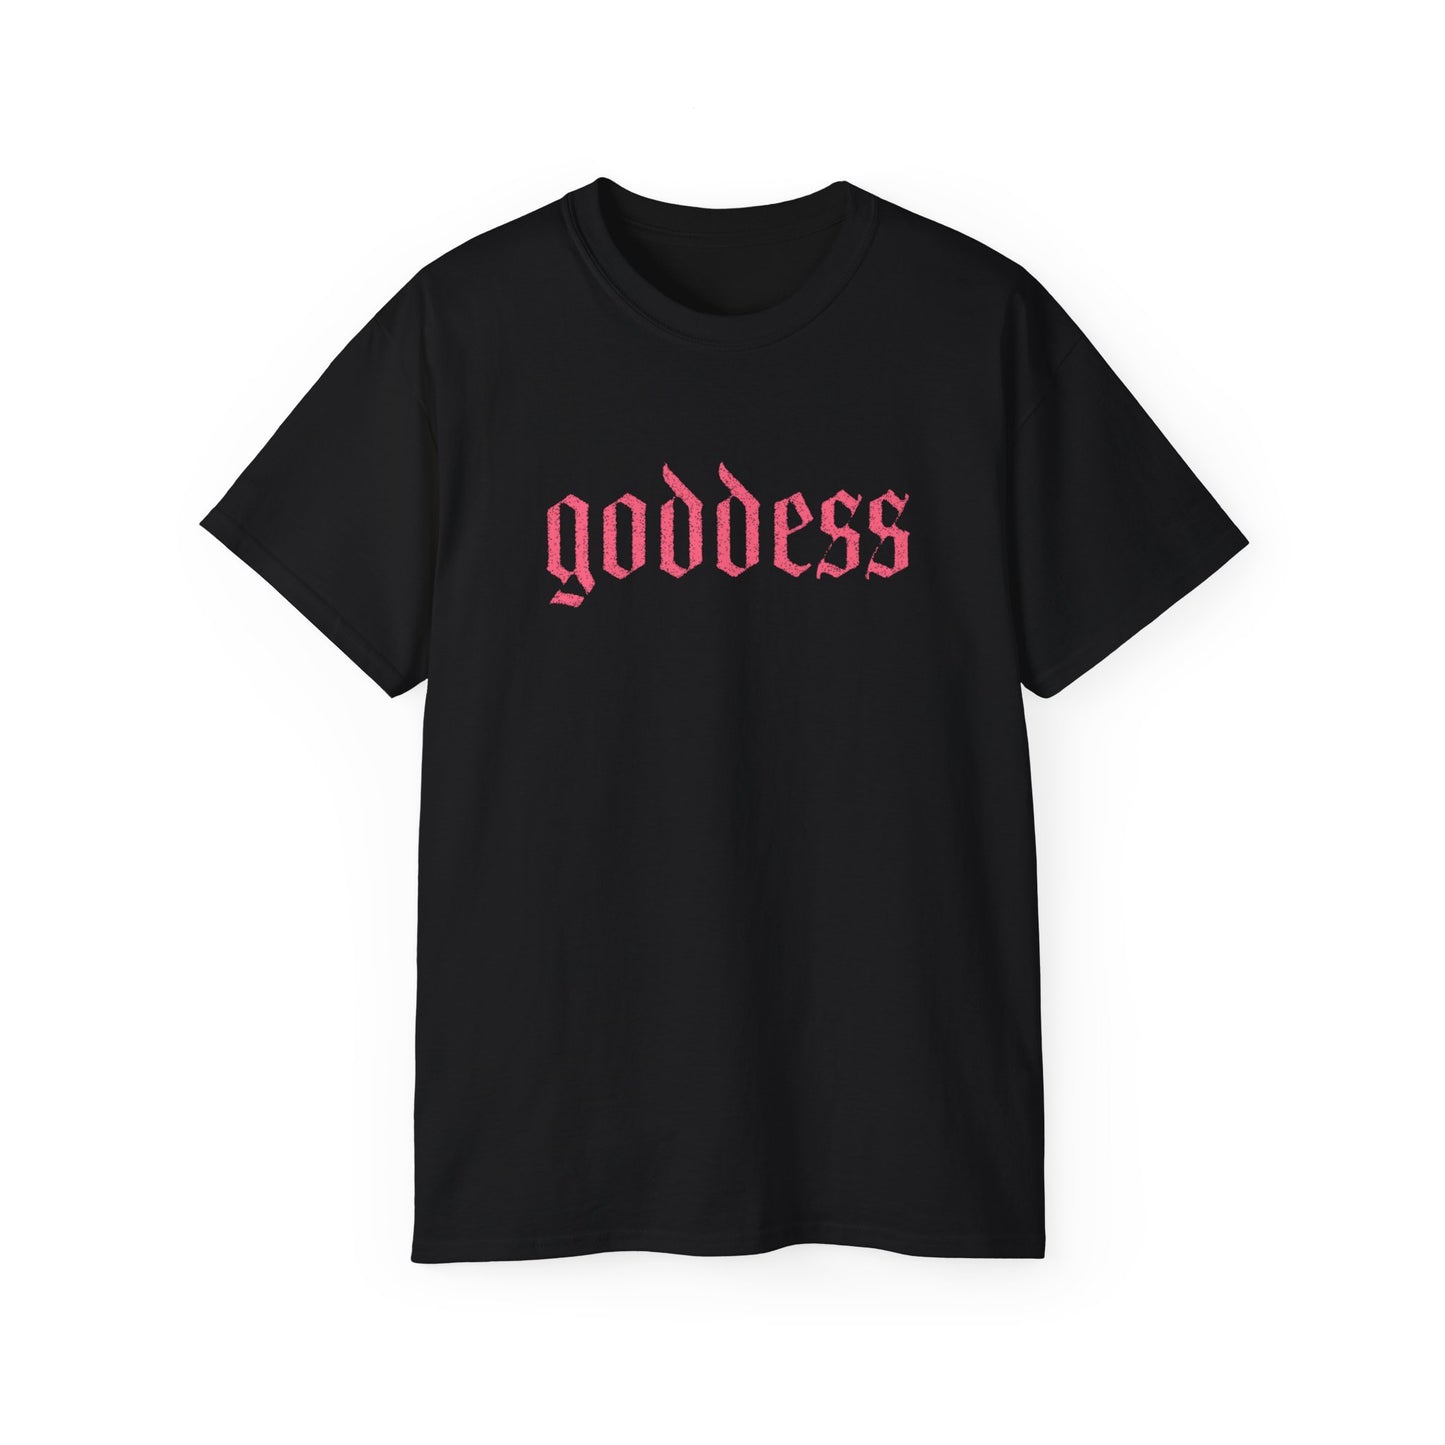 Goddess - Dark T-Shirt